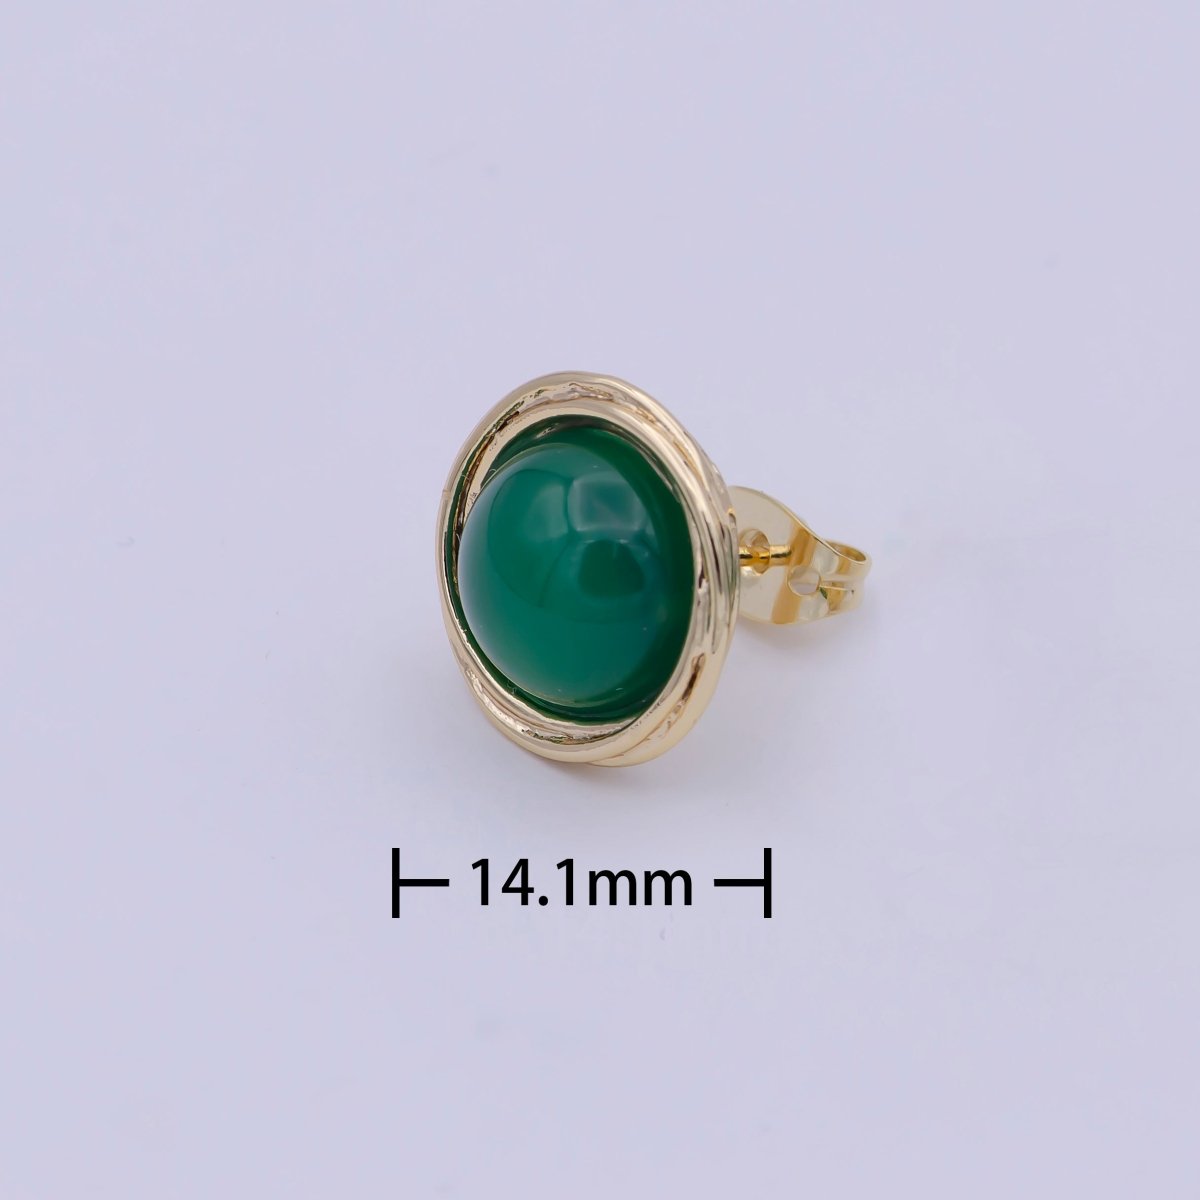 Emerald Studs Earring - Emerald Jewelry - Small Round Emerald Earrings - Green Stone Earring Q-164 - DLUXCA